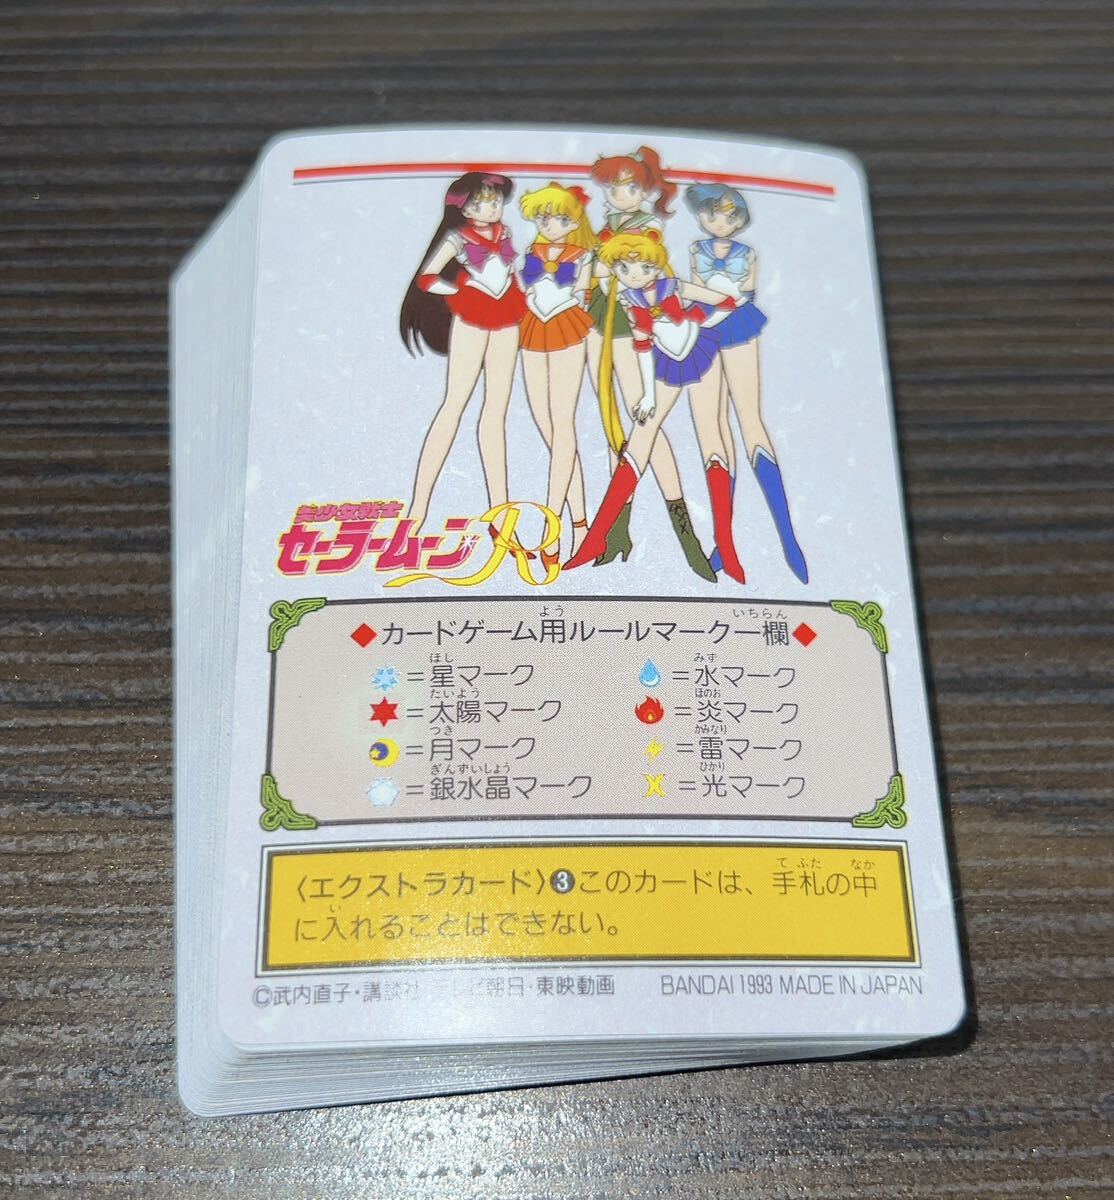  Sailor Moon Carddas graph .ti2. all 42 kind full comp 